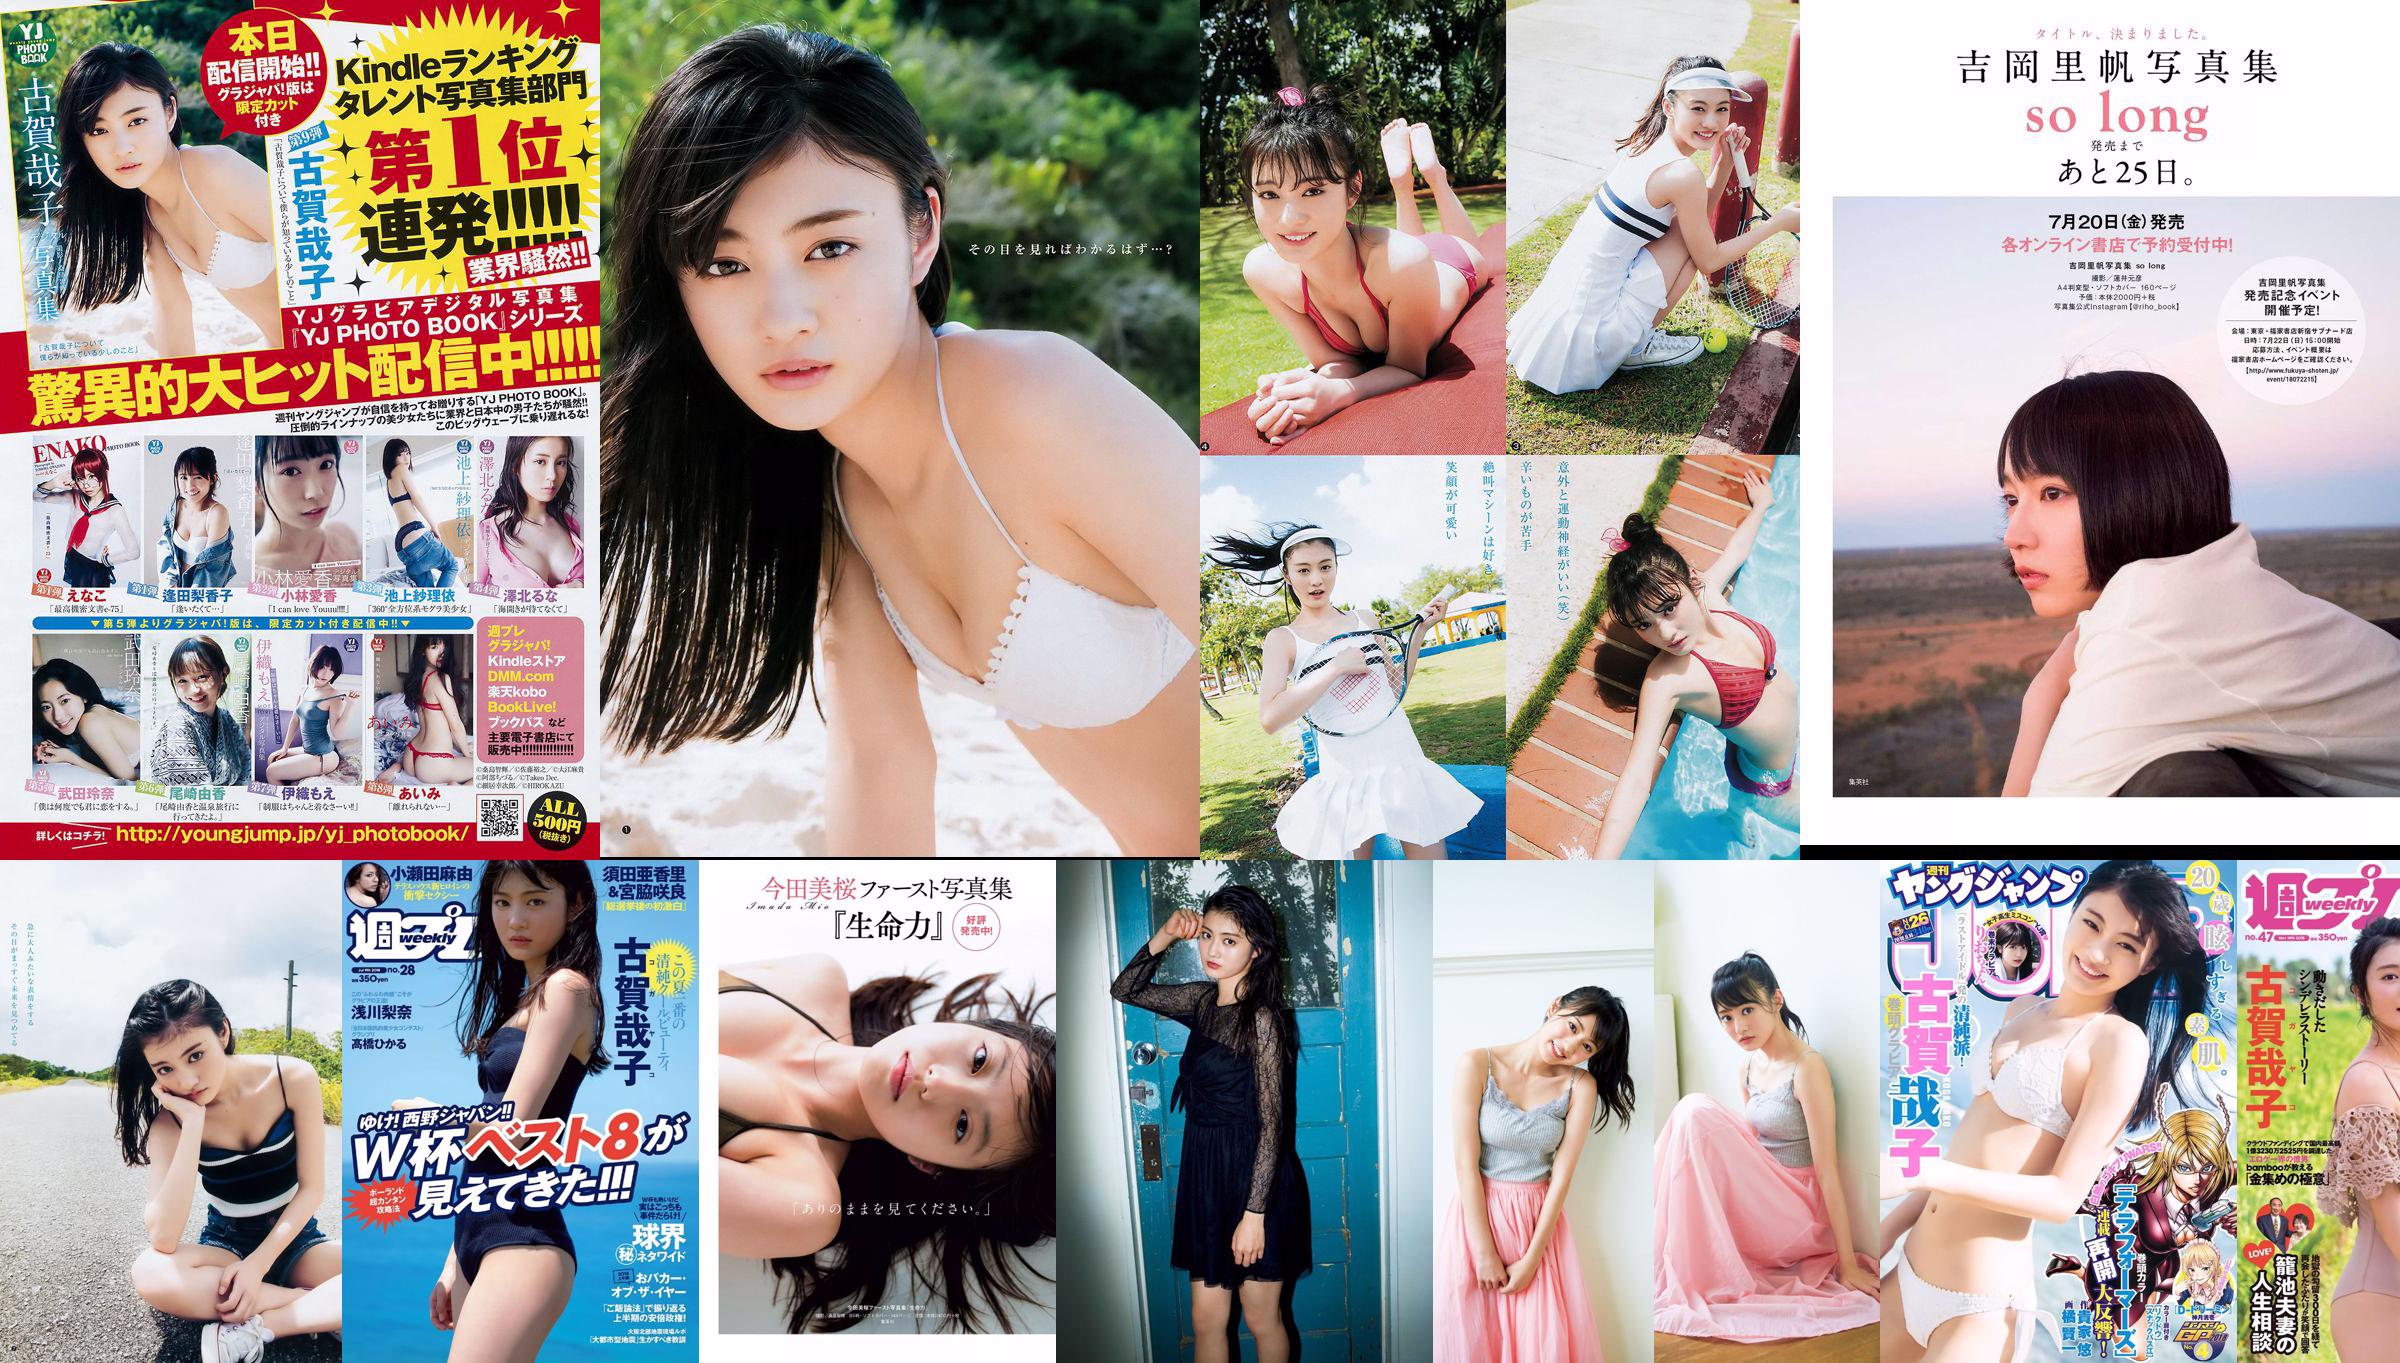 Yoshiko Koga りおちょん [Weekly Young Jump] No. 26 Photo Magazine in 2018 No.824d74 Page 1